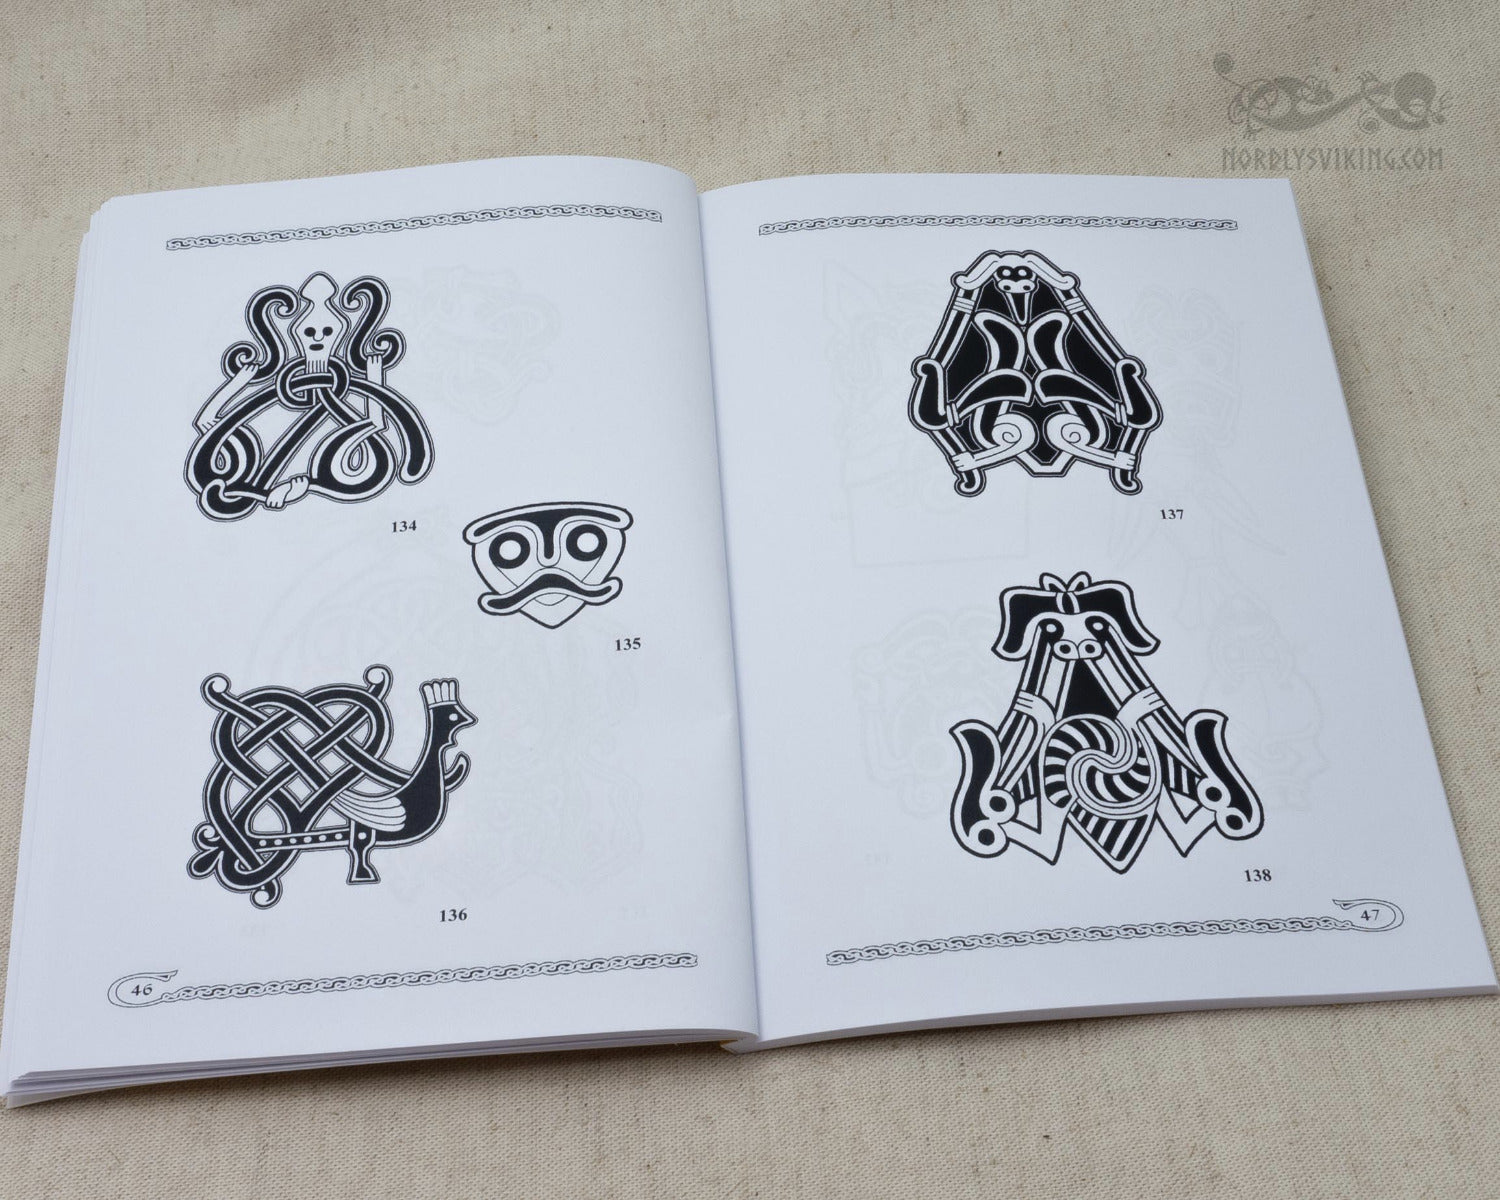 Viking and Slavic Ornamental Design Vol. 2